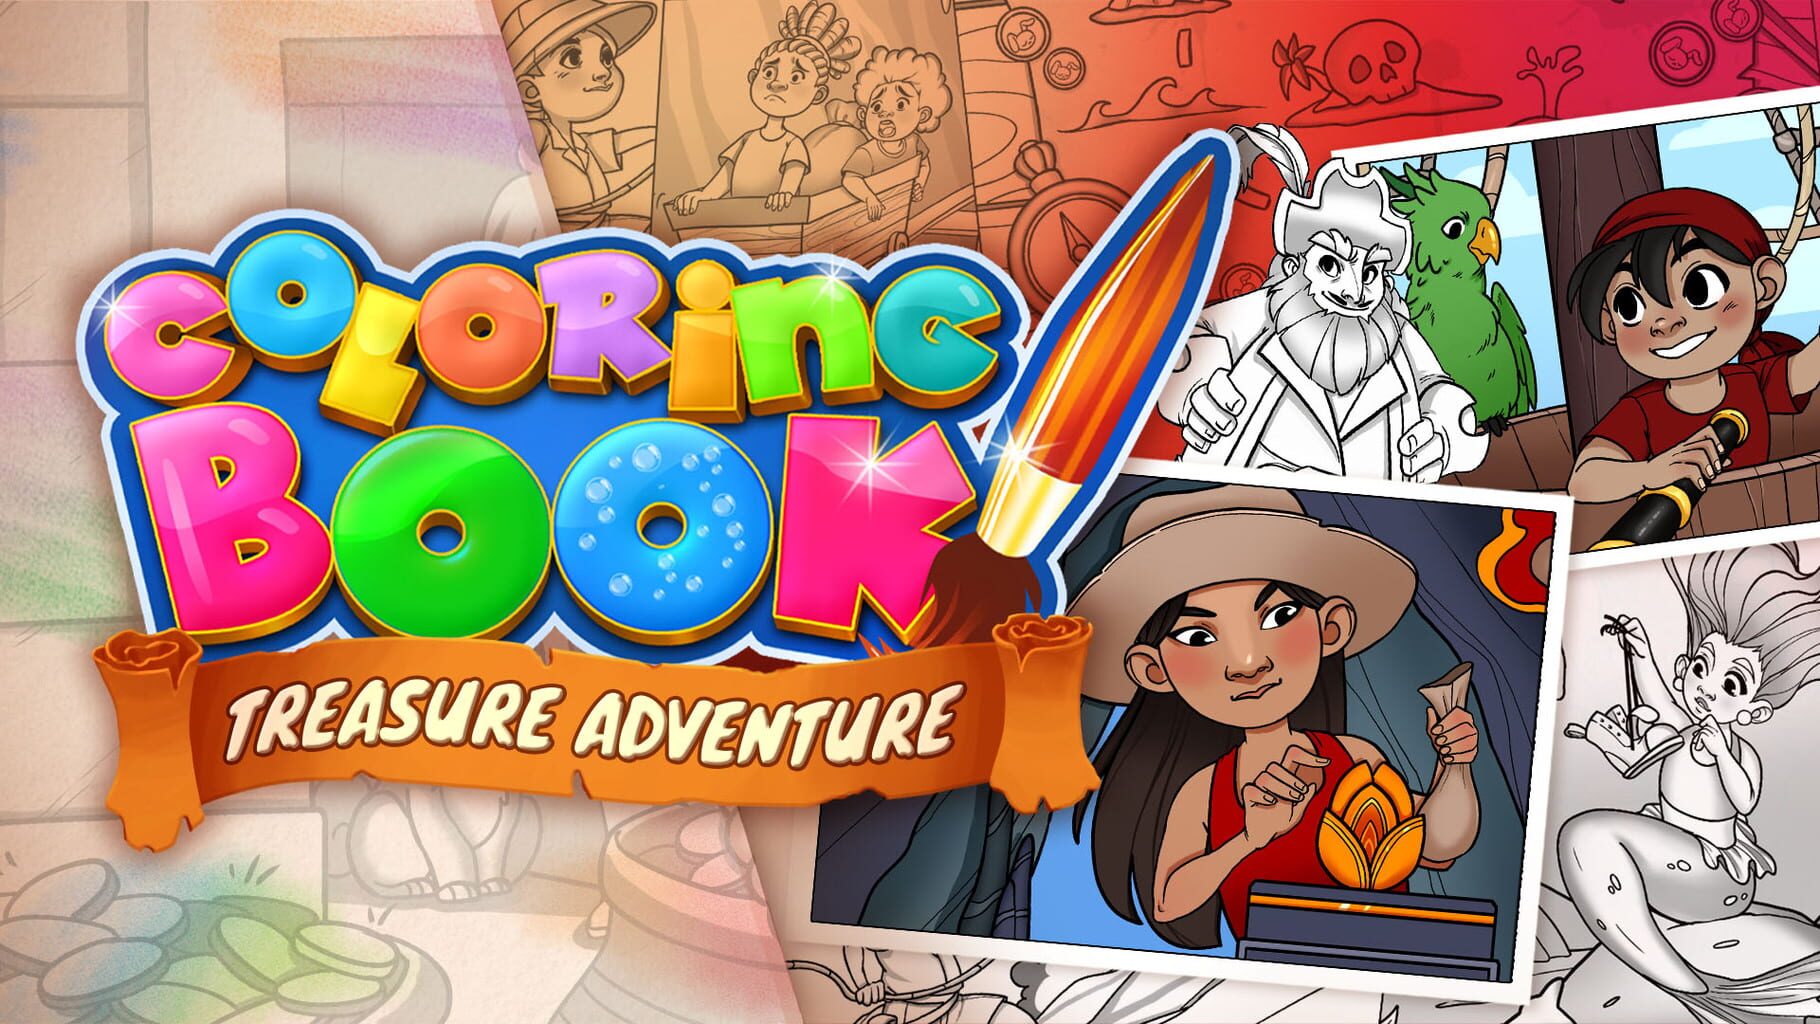 Coloring Book: Treasure Adventure artwork